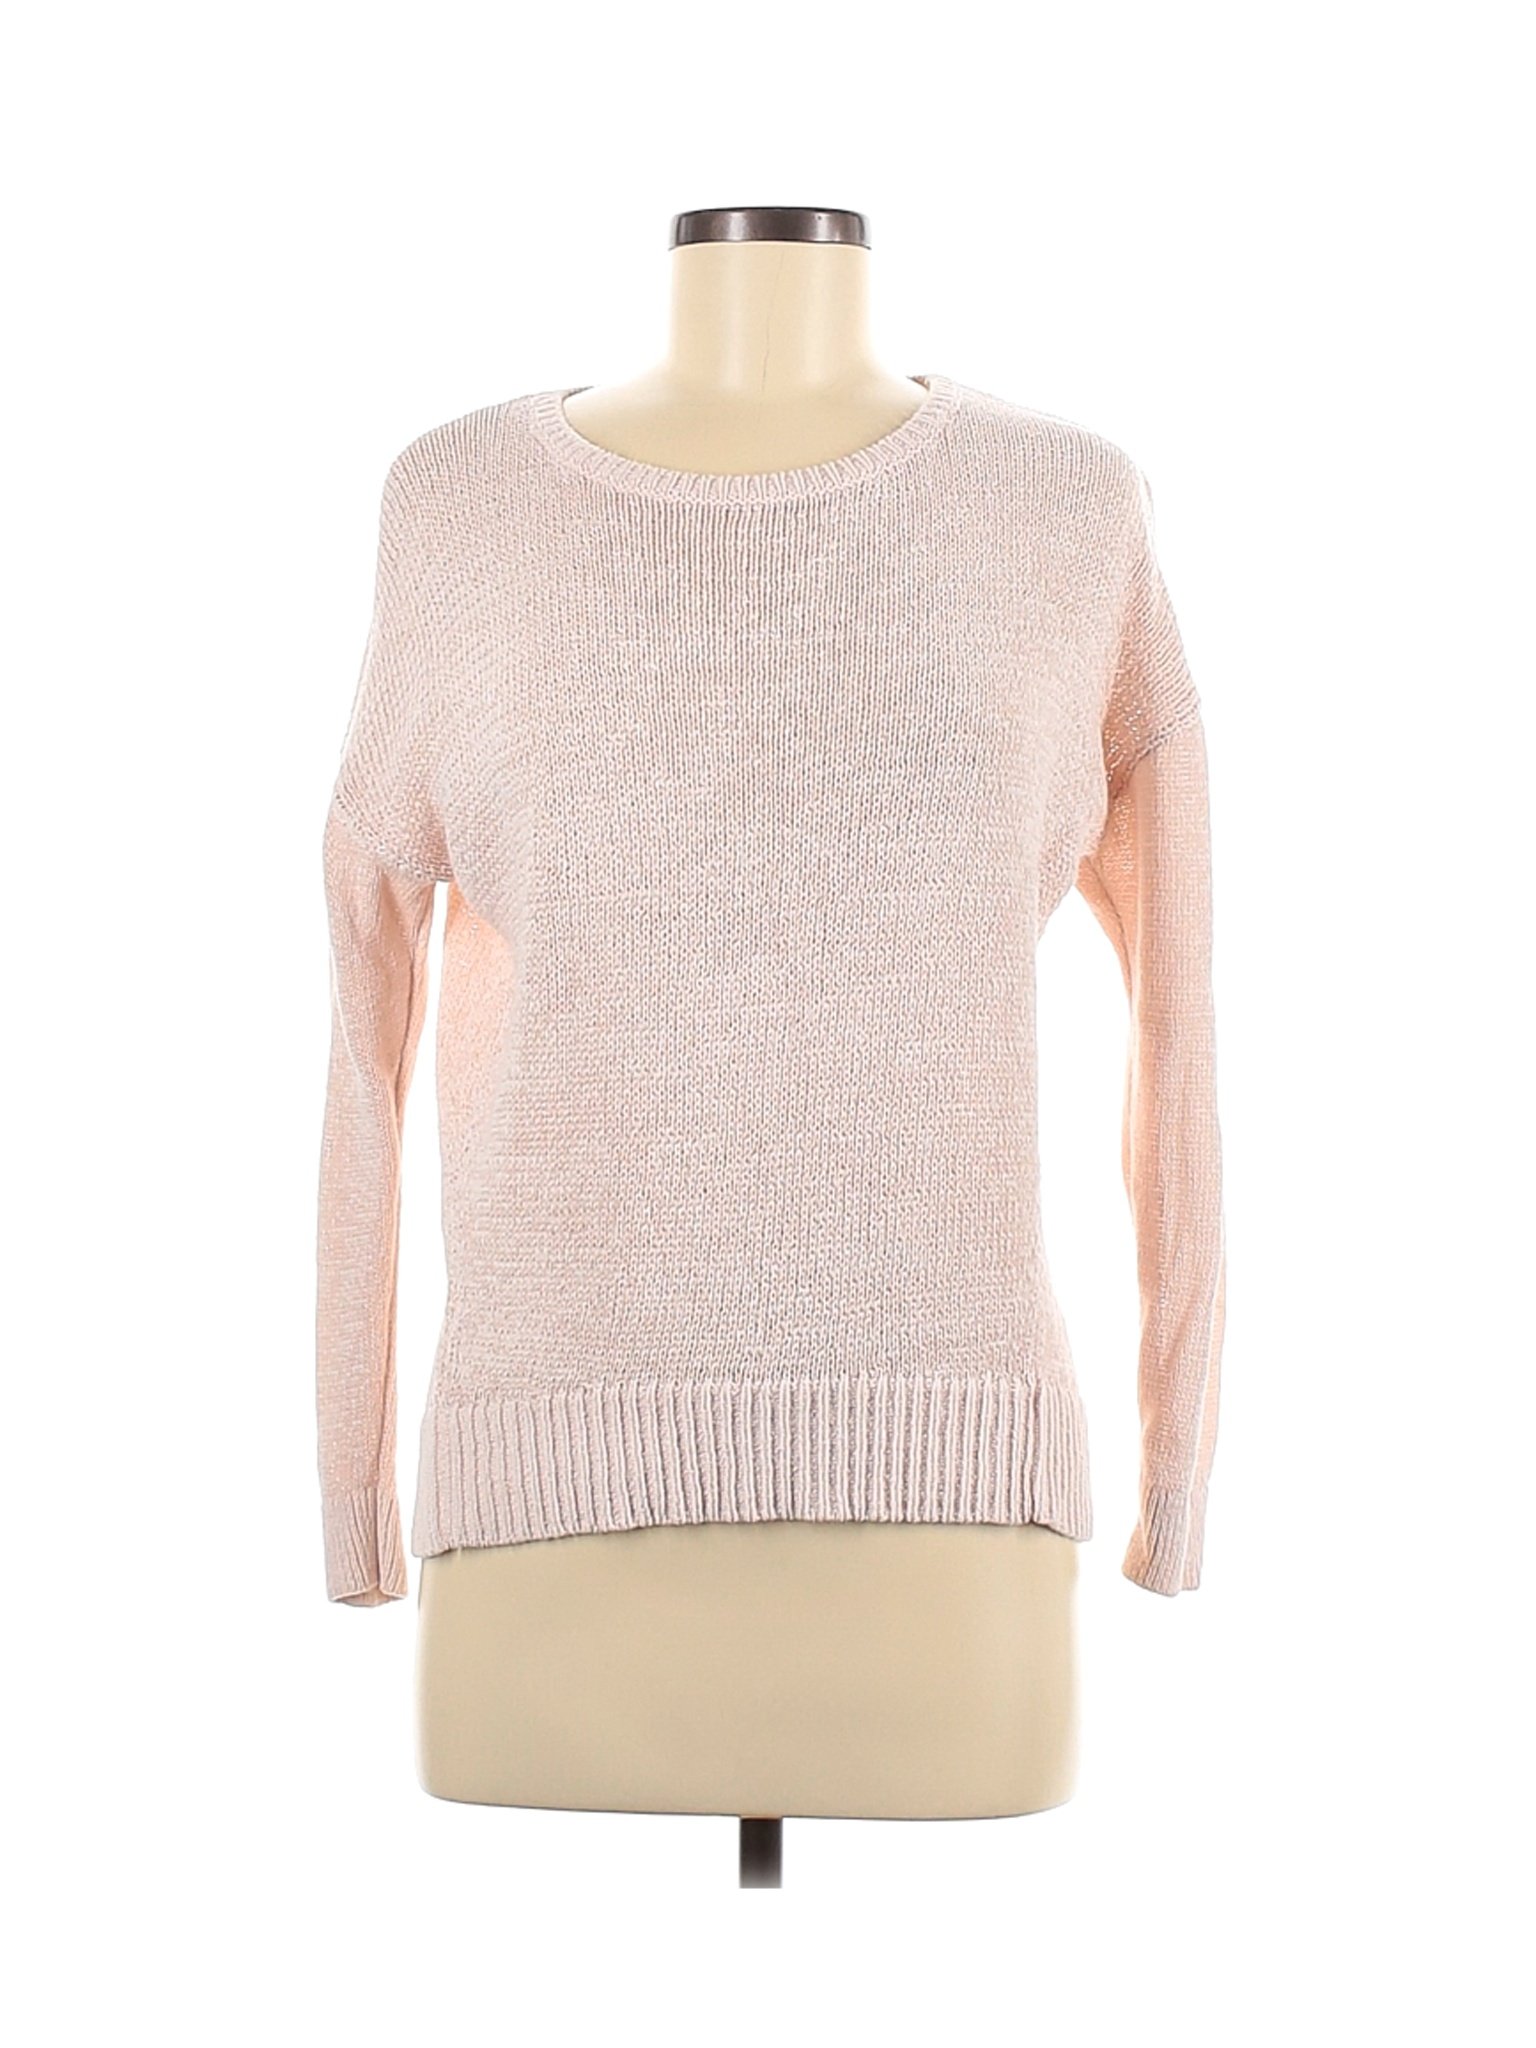 Ann Taylor LOFT Women Brown Pullover Sweater S | eBay